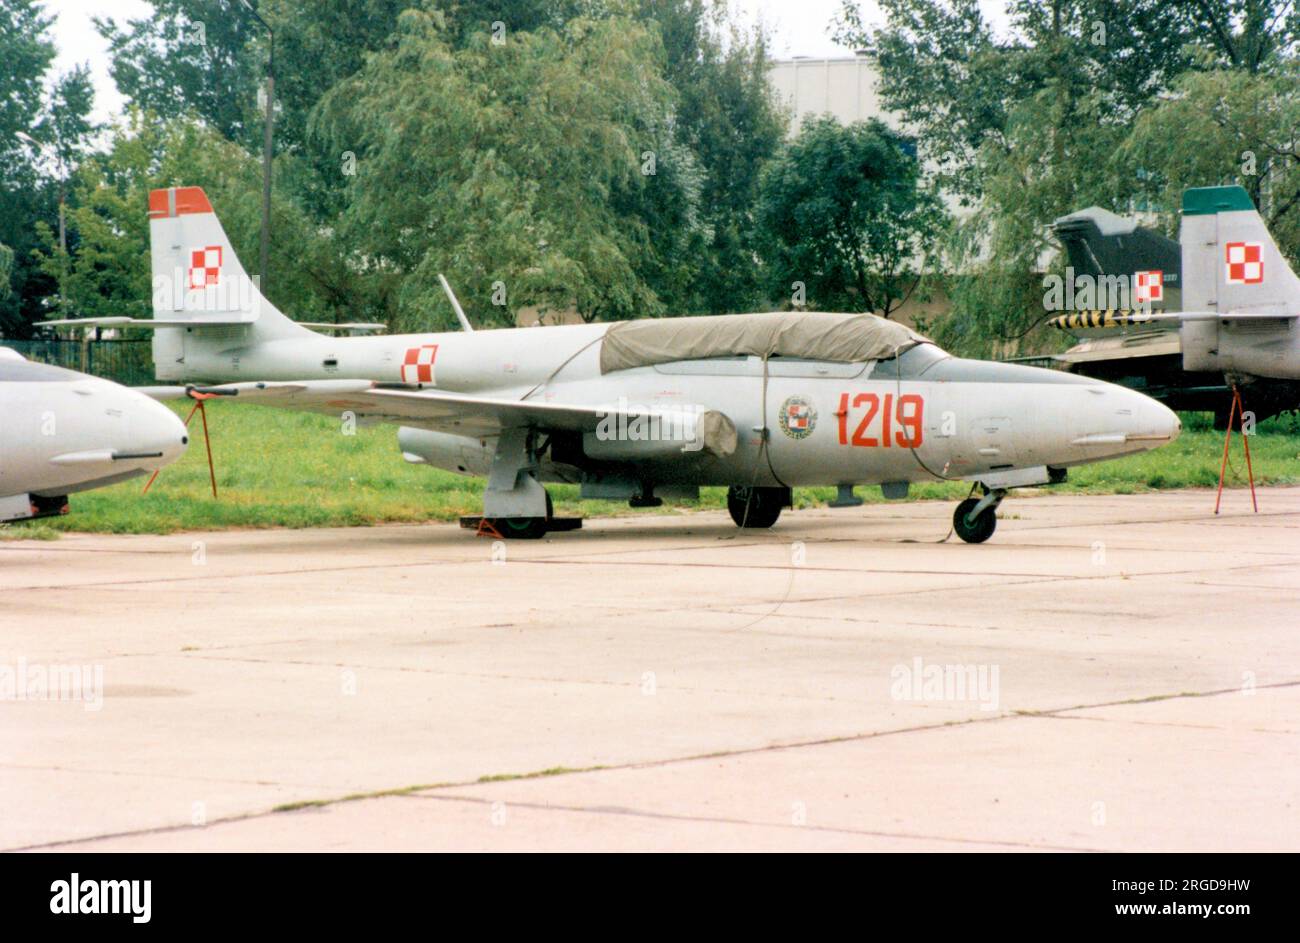 Polish Air Force - PZL-Mielec TS-11 Iskra bis D 1219 (msn 3H12-19). Stock Photo